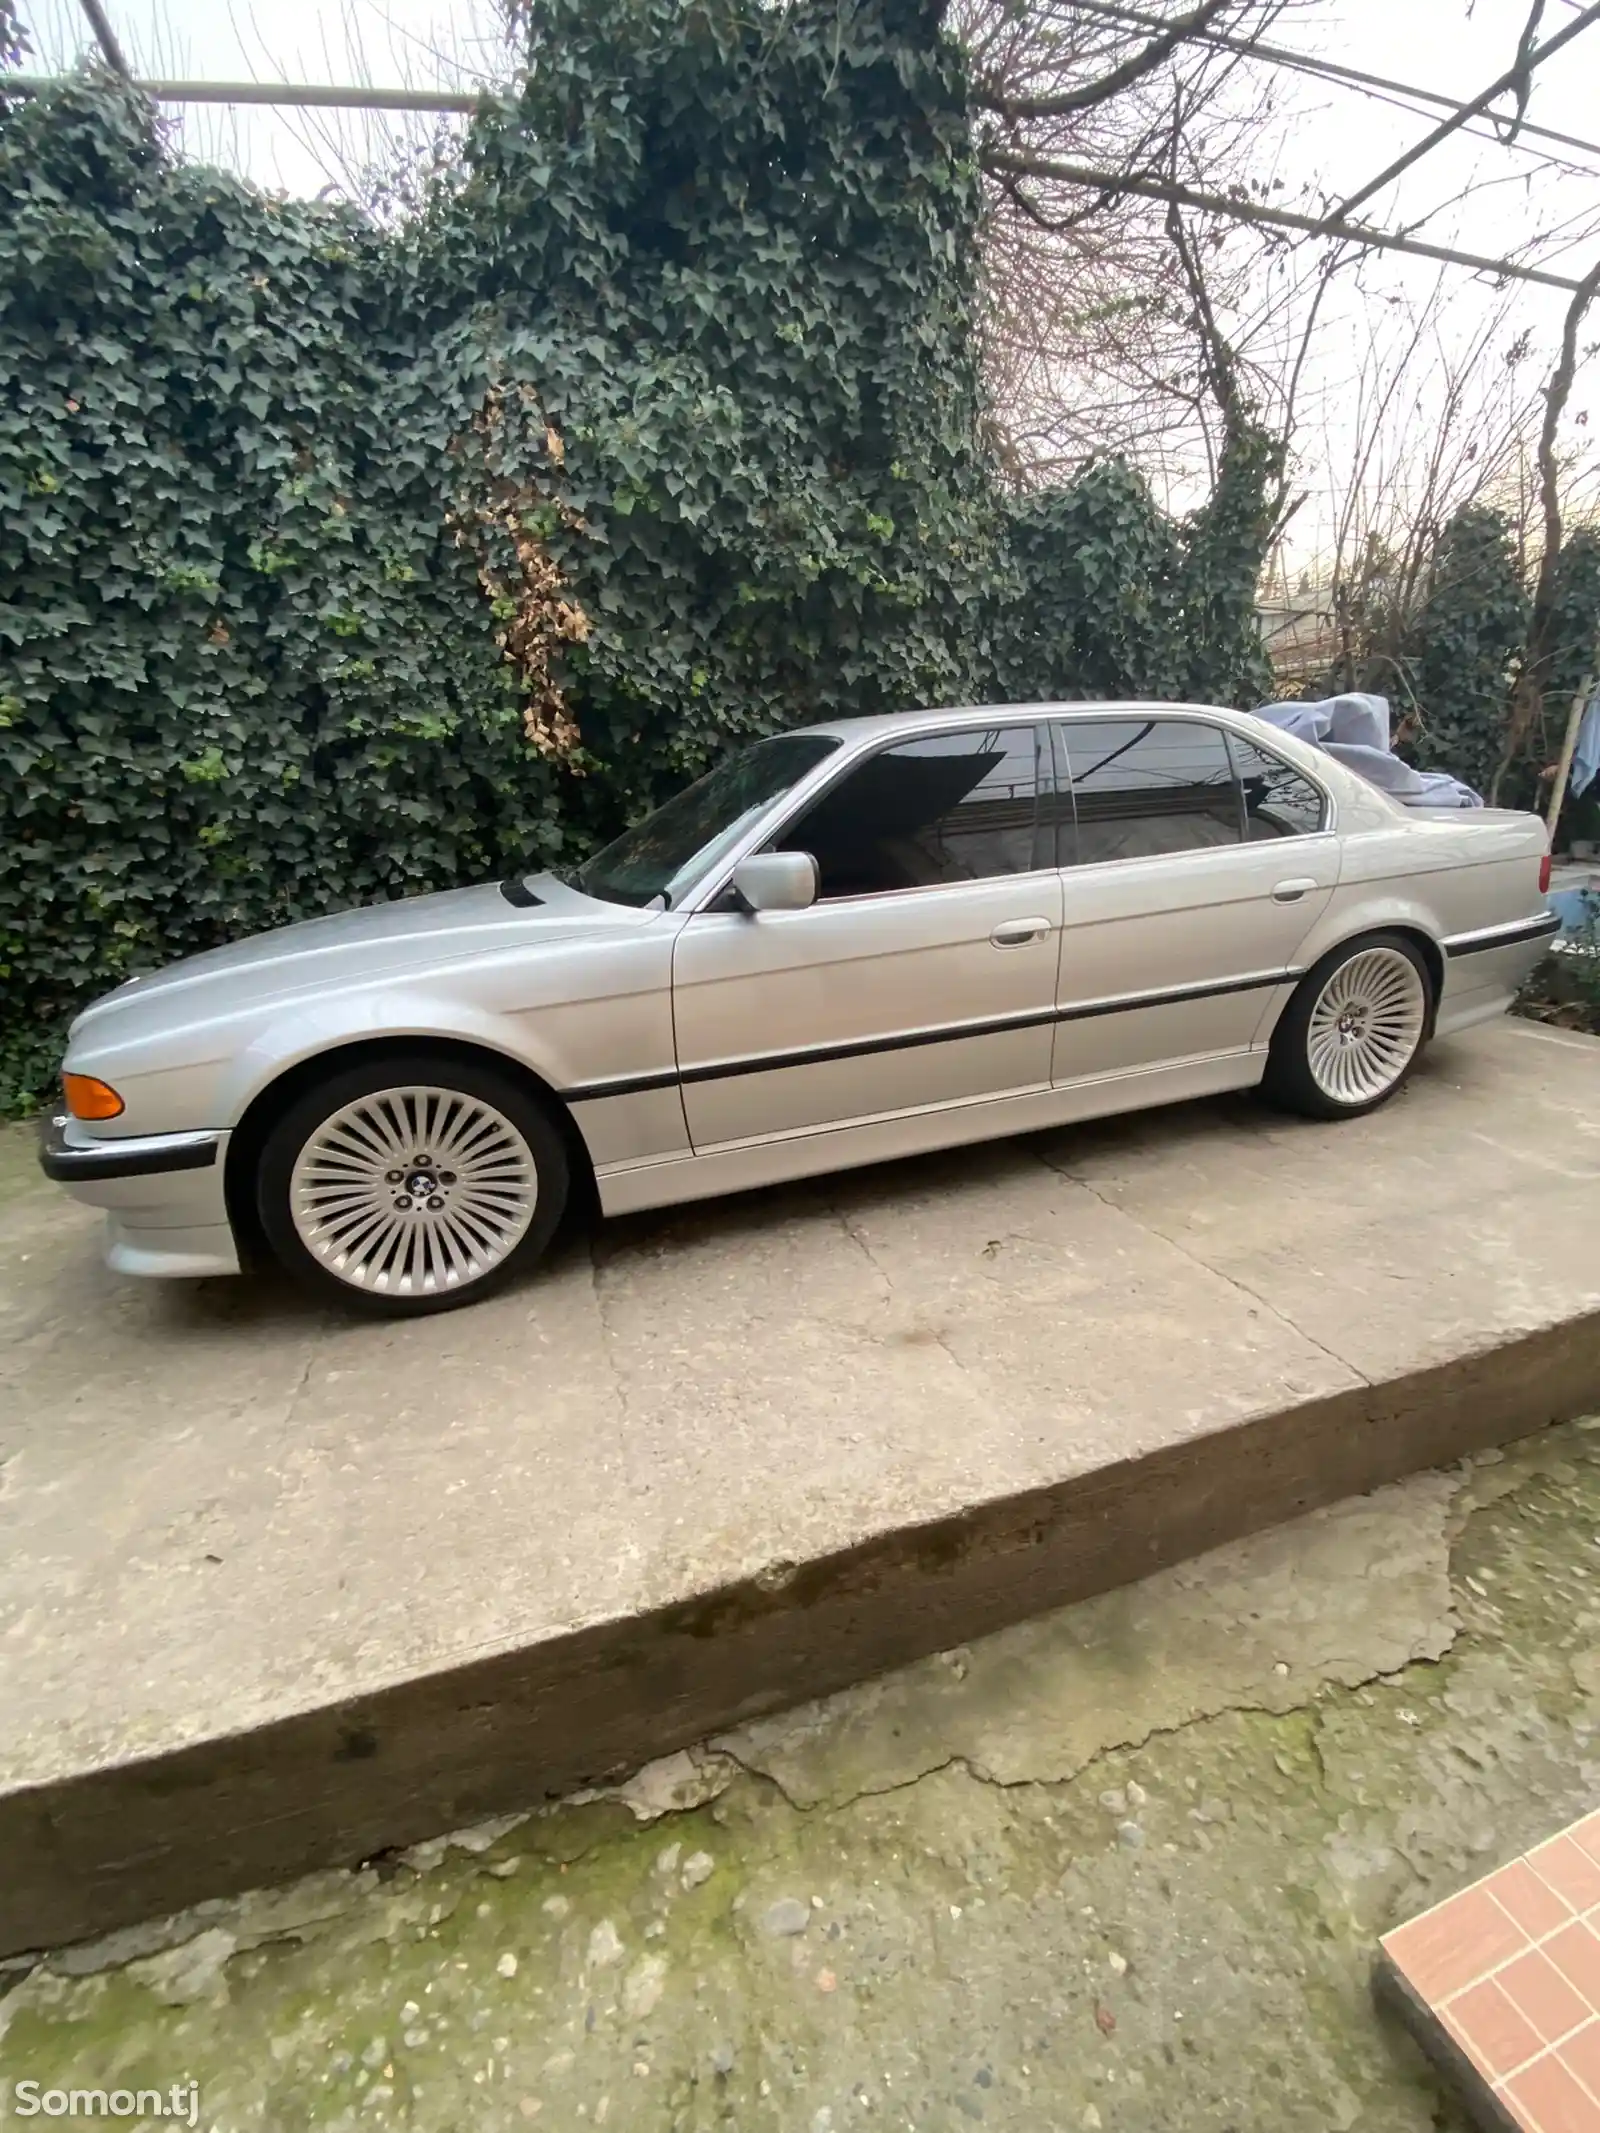 BMW 7 series, 2000-2